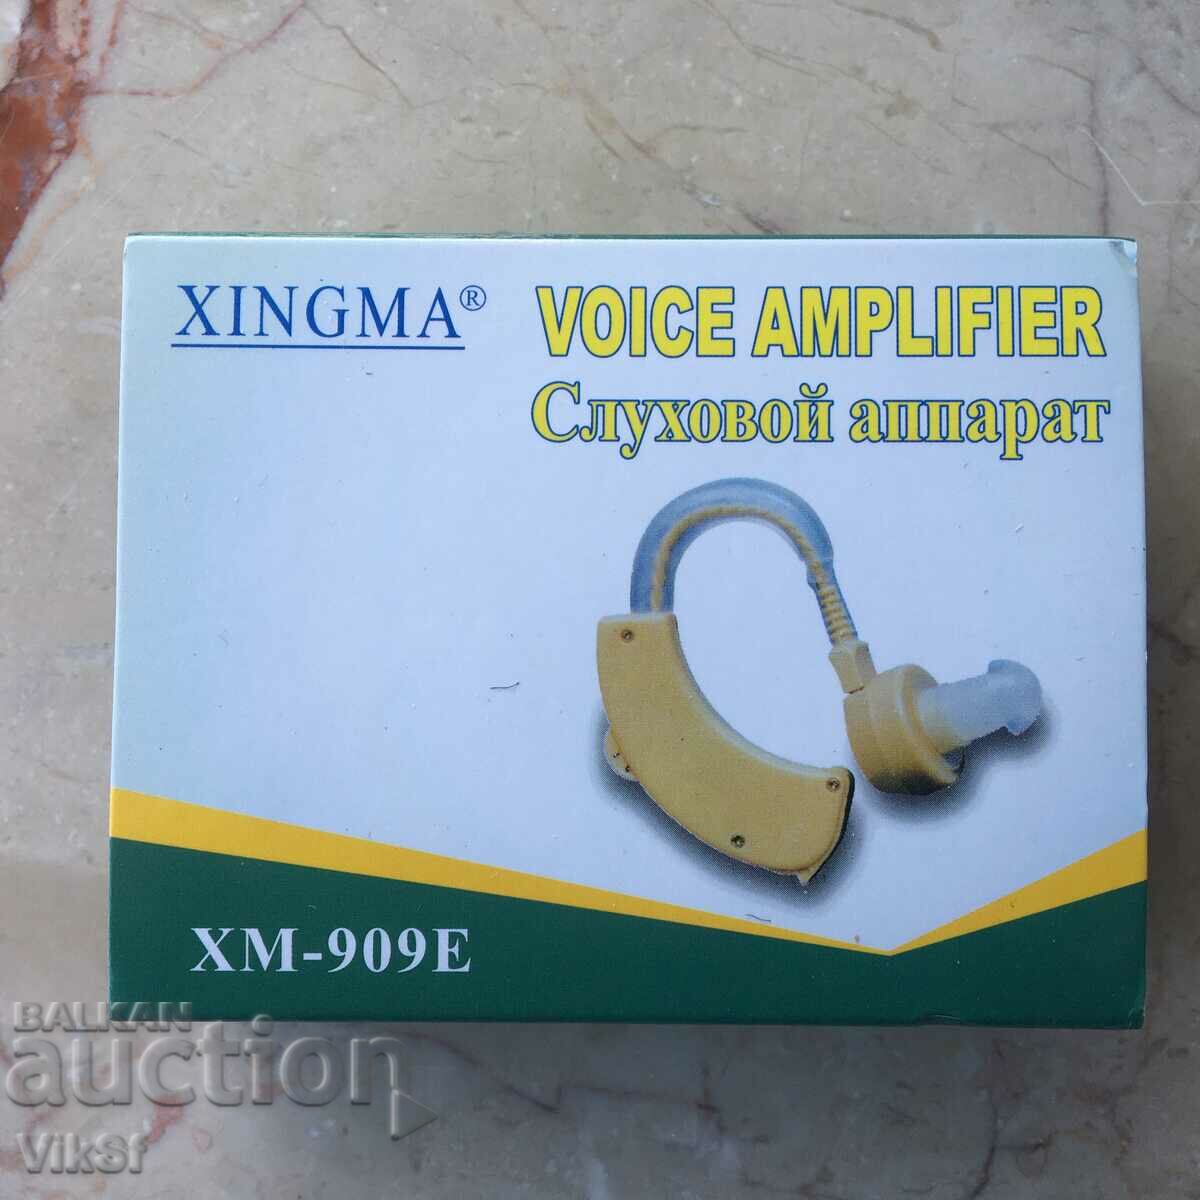 High quality hearing aid Xm-909e